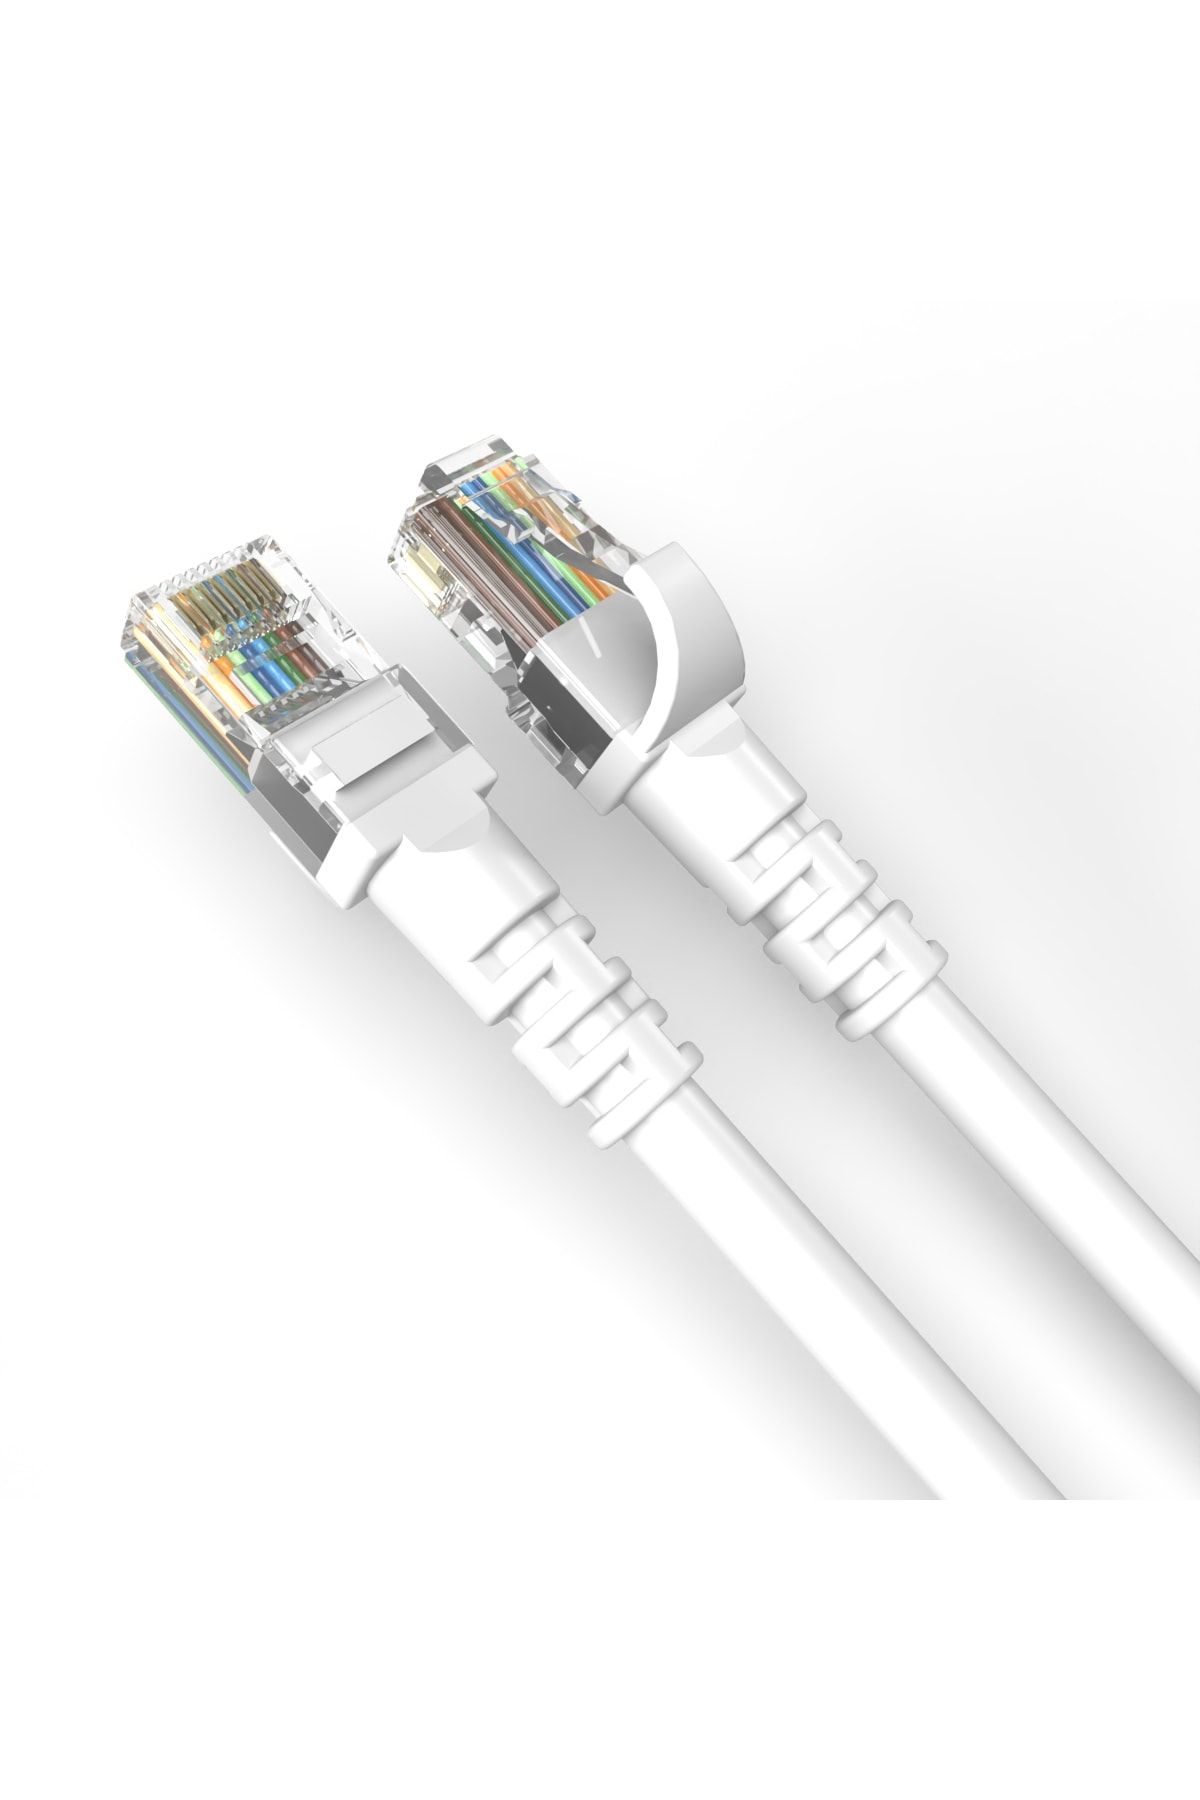 DERKAB 7 Metre Cat6 Network-Ağ-Ethernet Kablosu Beyaz